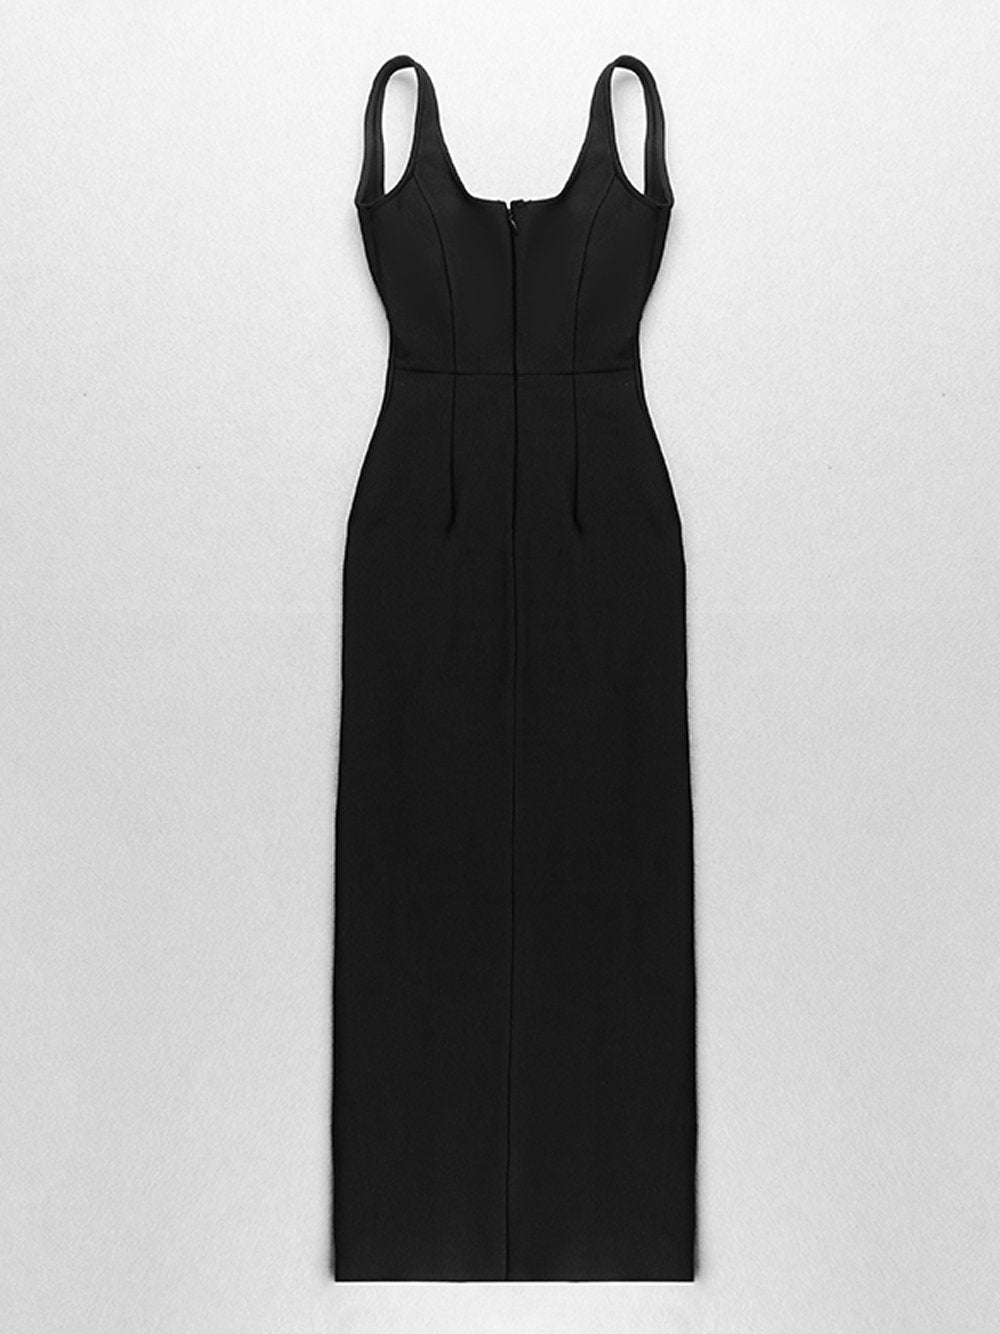 CASSIA Maxi Dress in Black